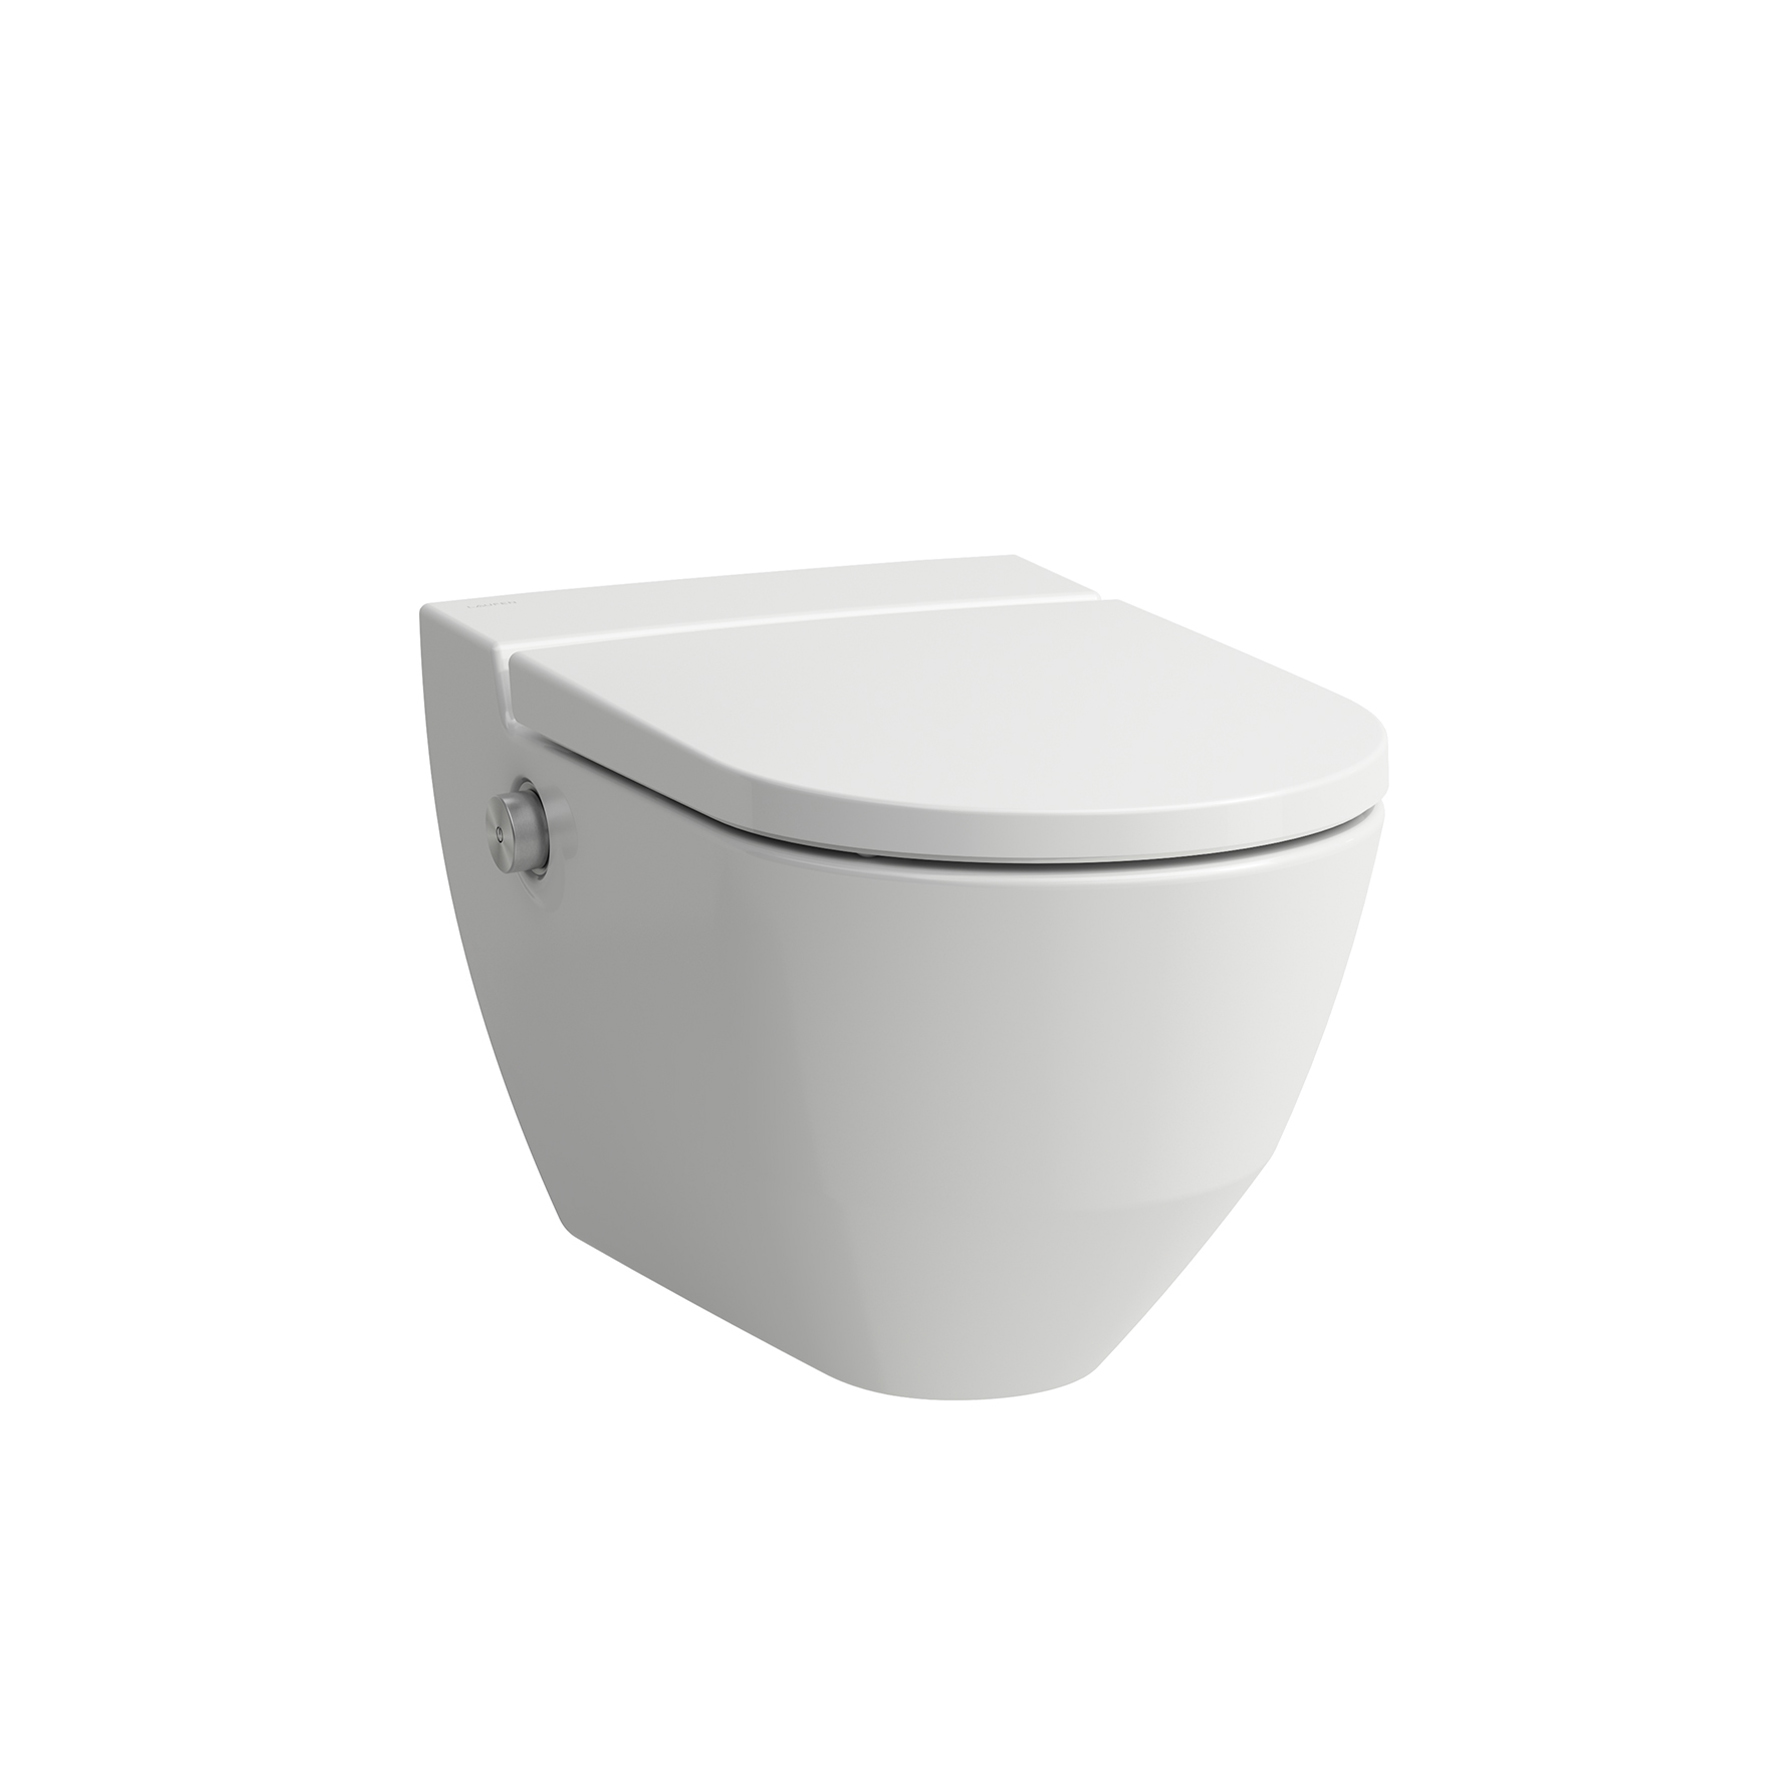 Dusch-Tiefspül-WC wandhängend CLEANET NAVIA 580x370x380 spülrandlos LCC weiß